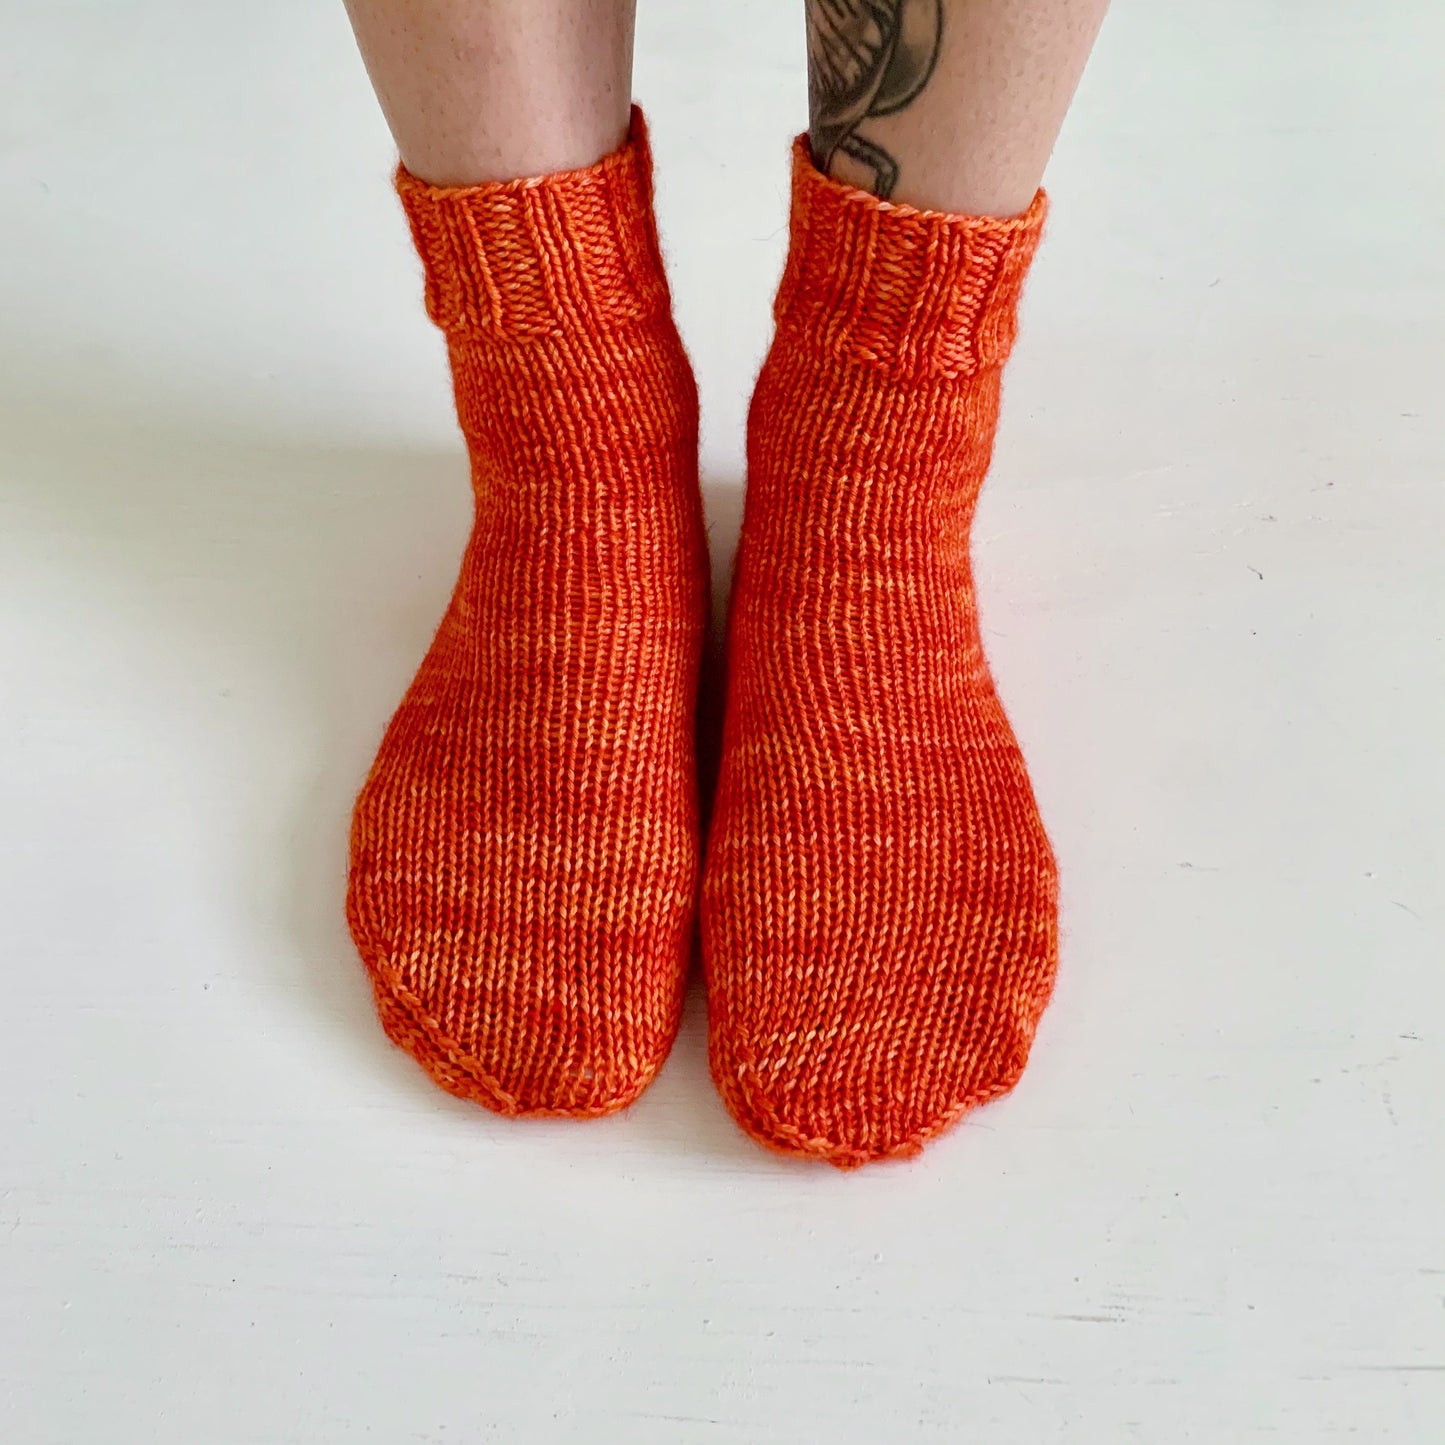 Simple Beginner Socks